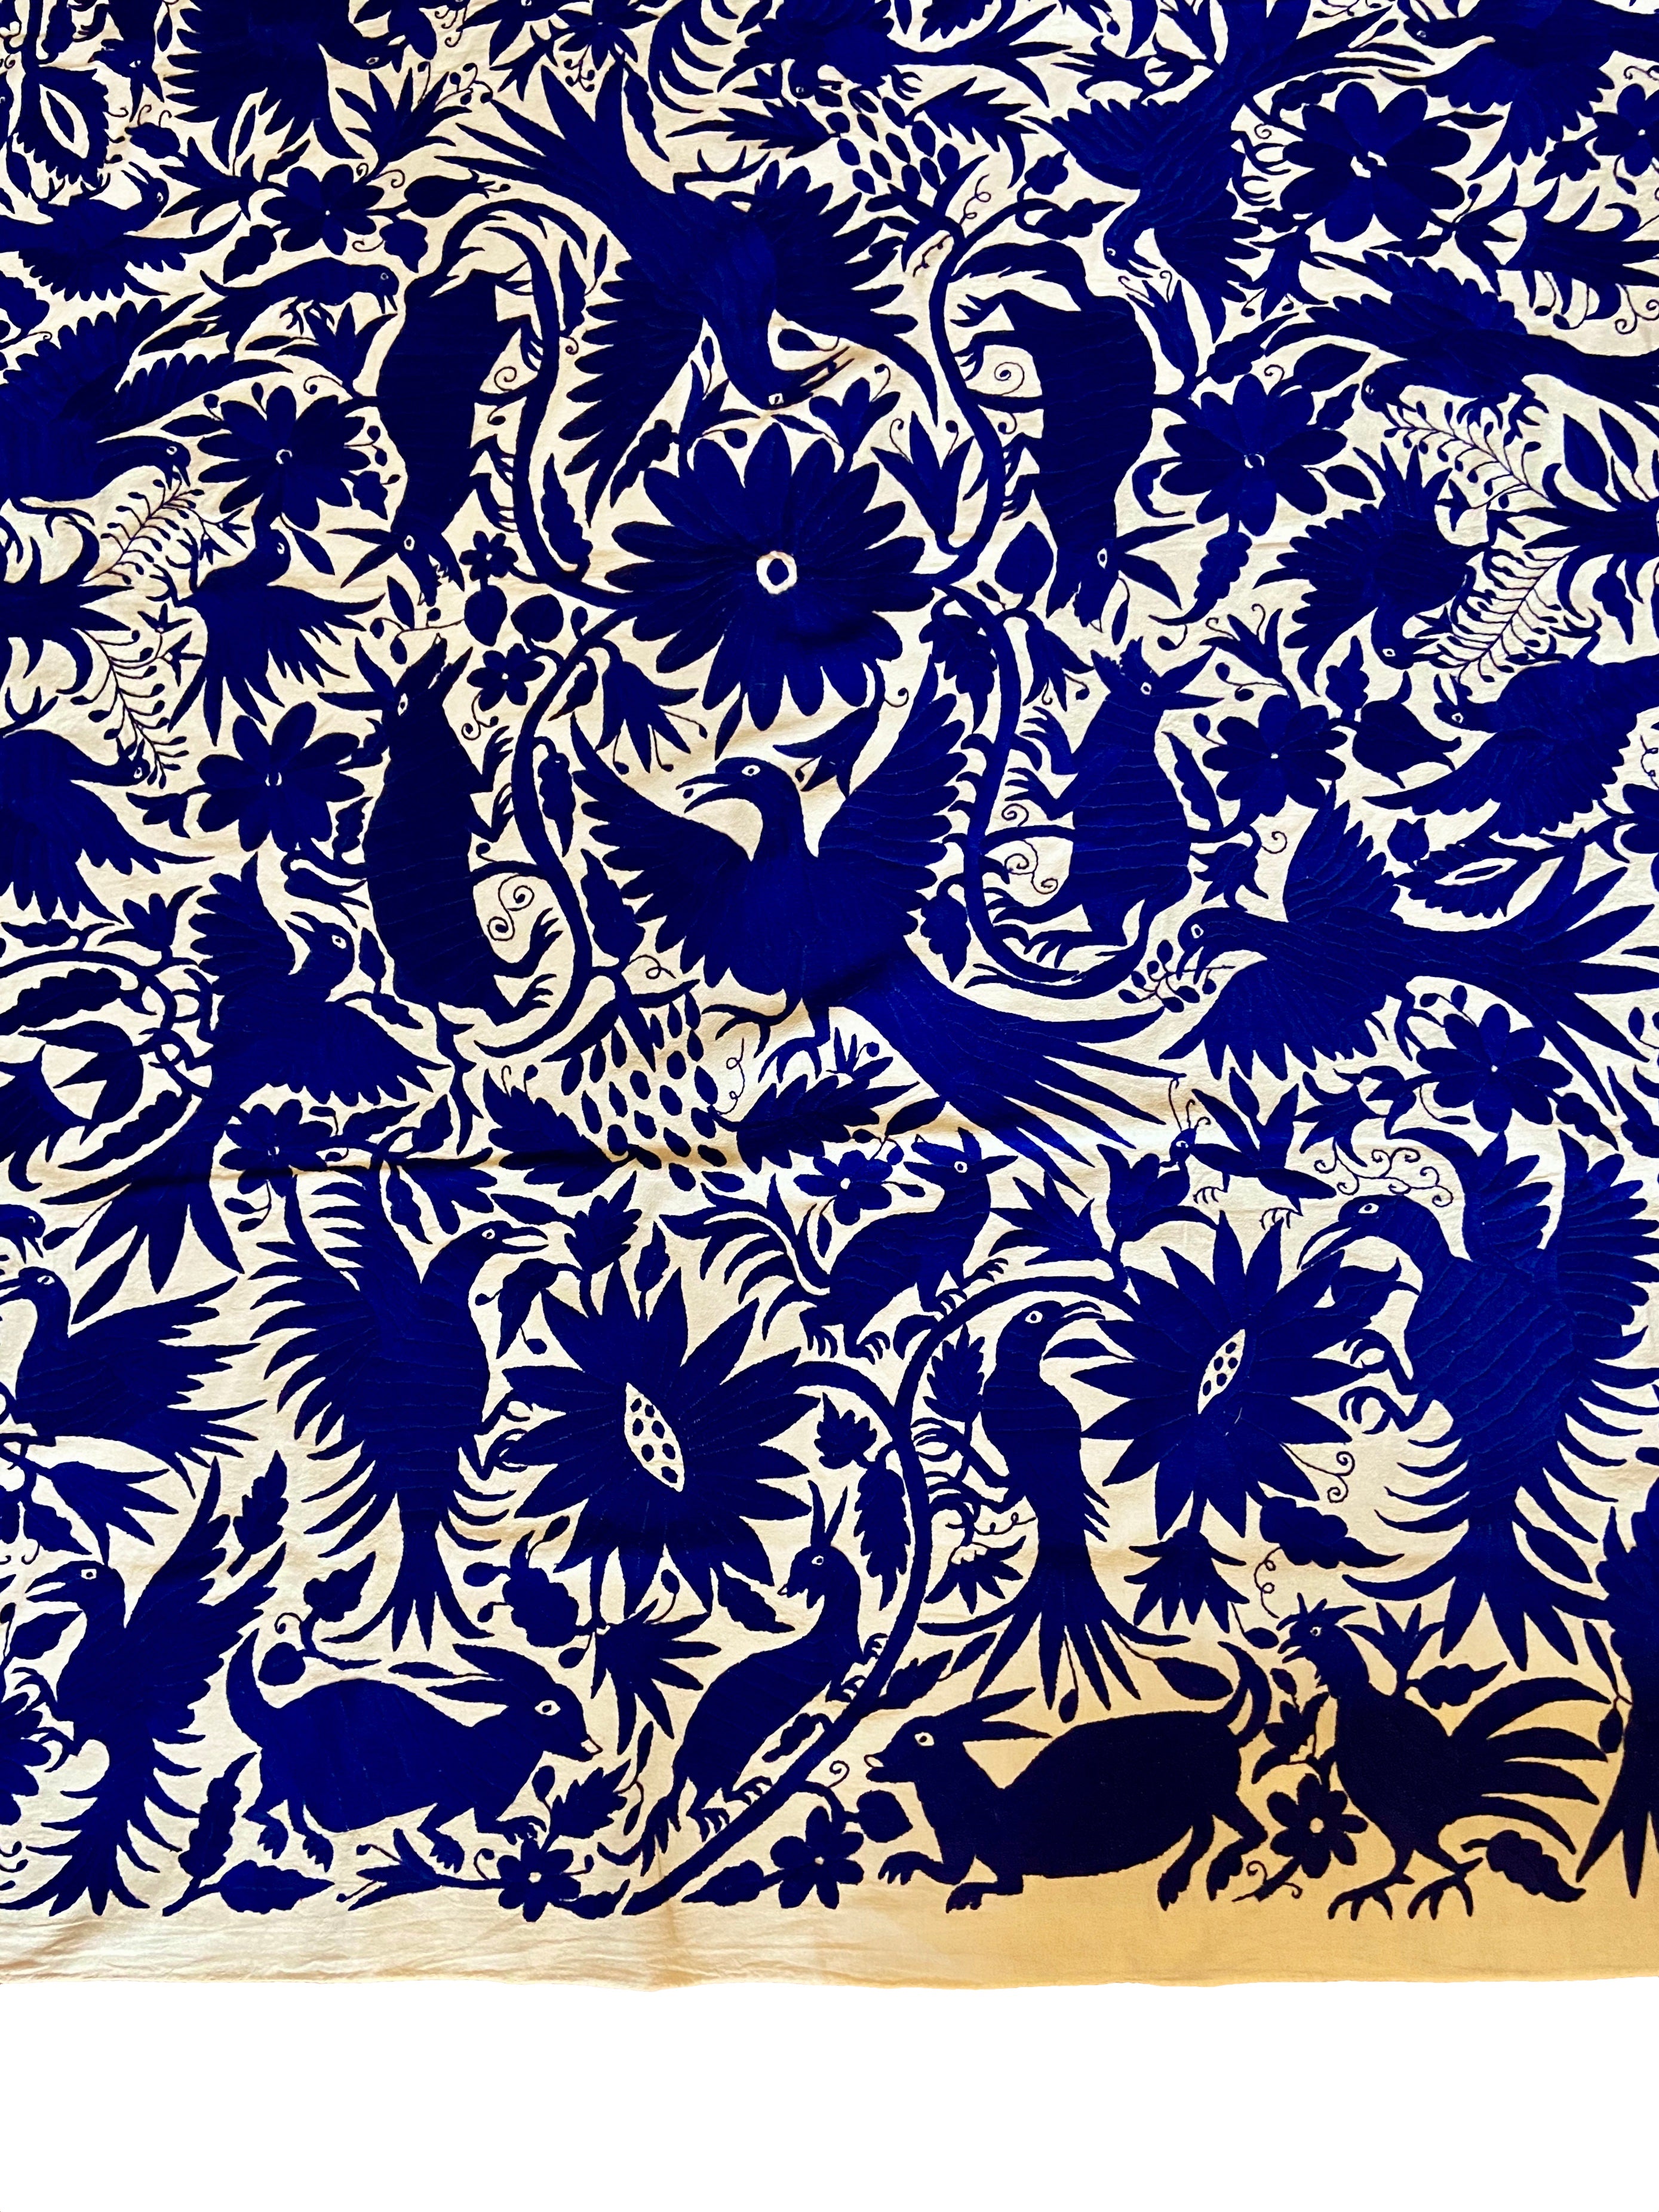 Jumbo Otomi Tapestry - Royal Blue